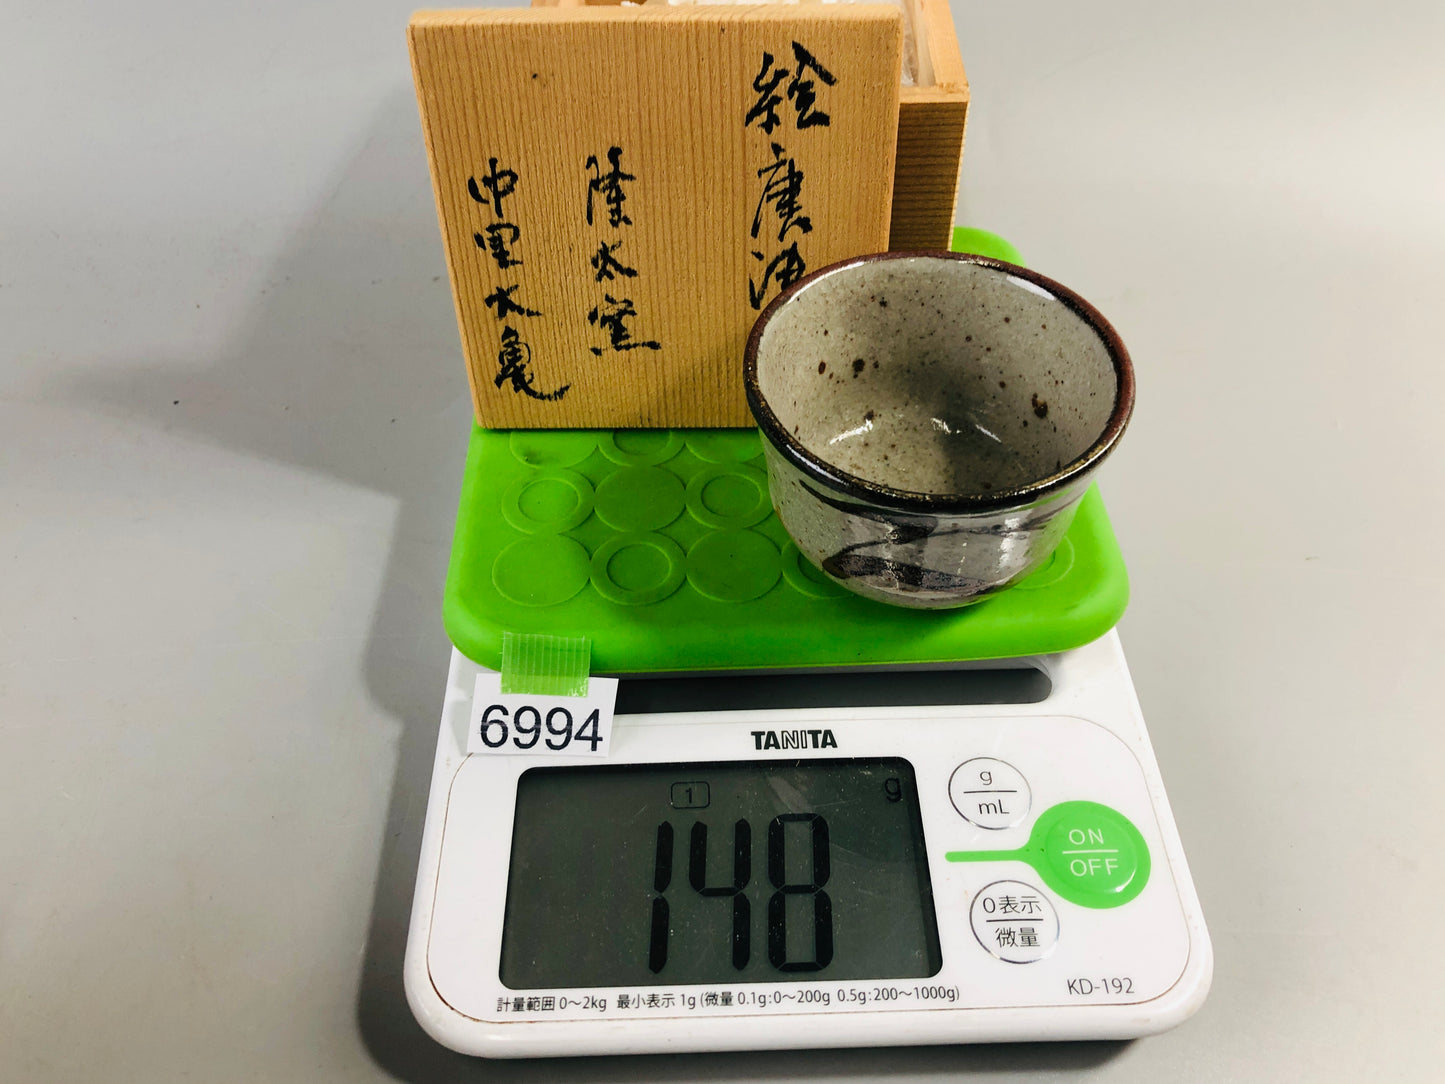 Y6994 [VIDEO] CHAWAN Karatsu-ware Sake cup signed box ekaratsu Japan antique alcohol